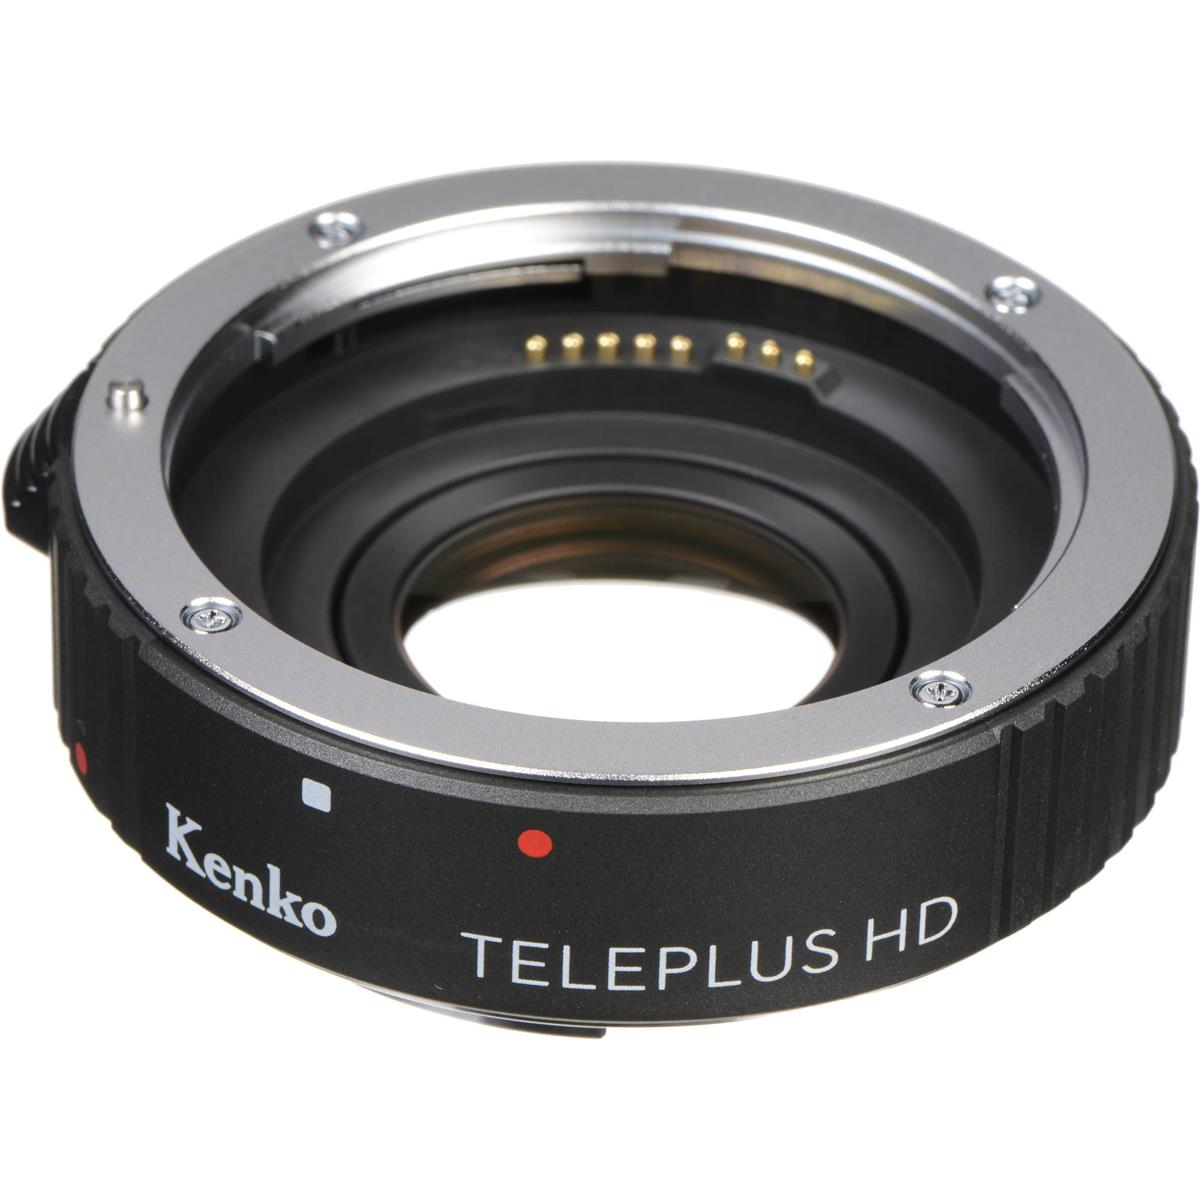 Image of Kenko Kenco 1.4x Teleplus HD DGX Teleconverter for Canon EOS EF-S and EF lenses